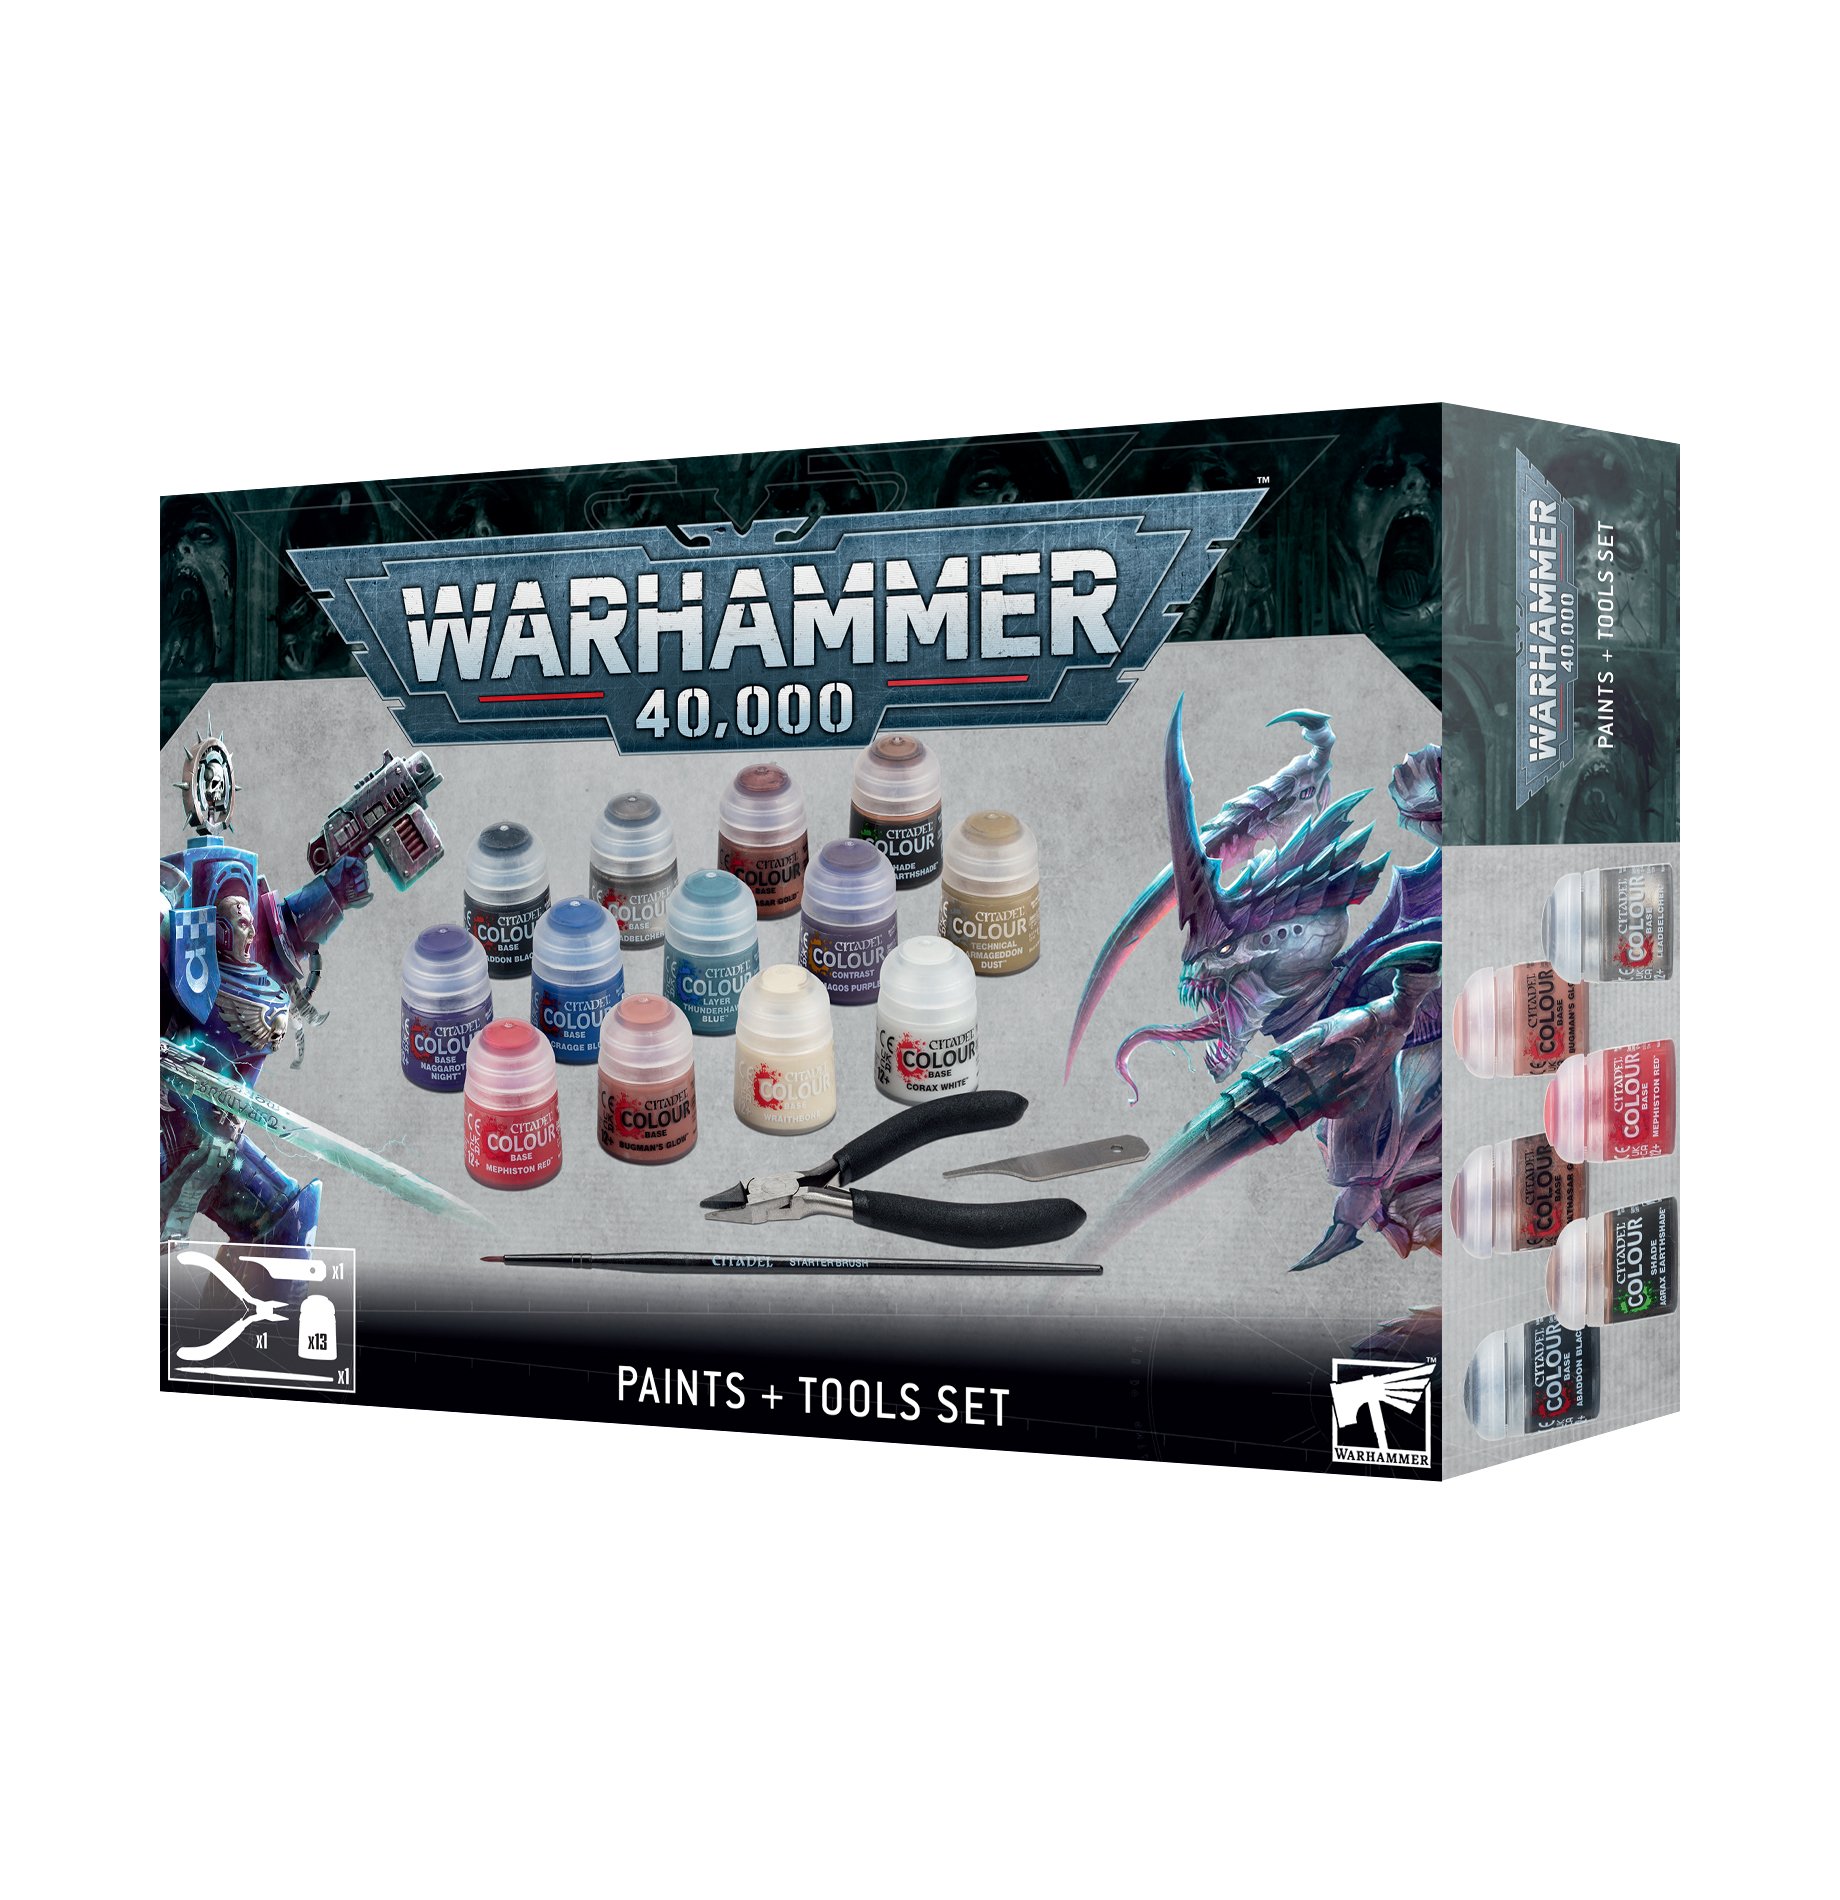 Warhammer 40k 10th Edition Paints + tools set